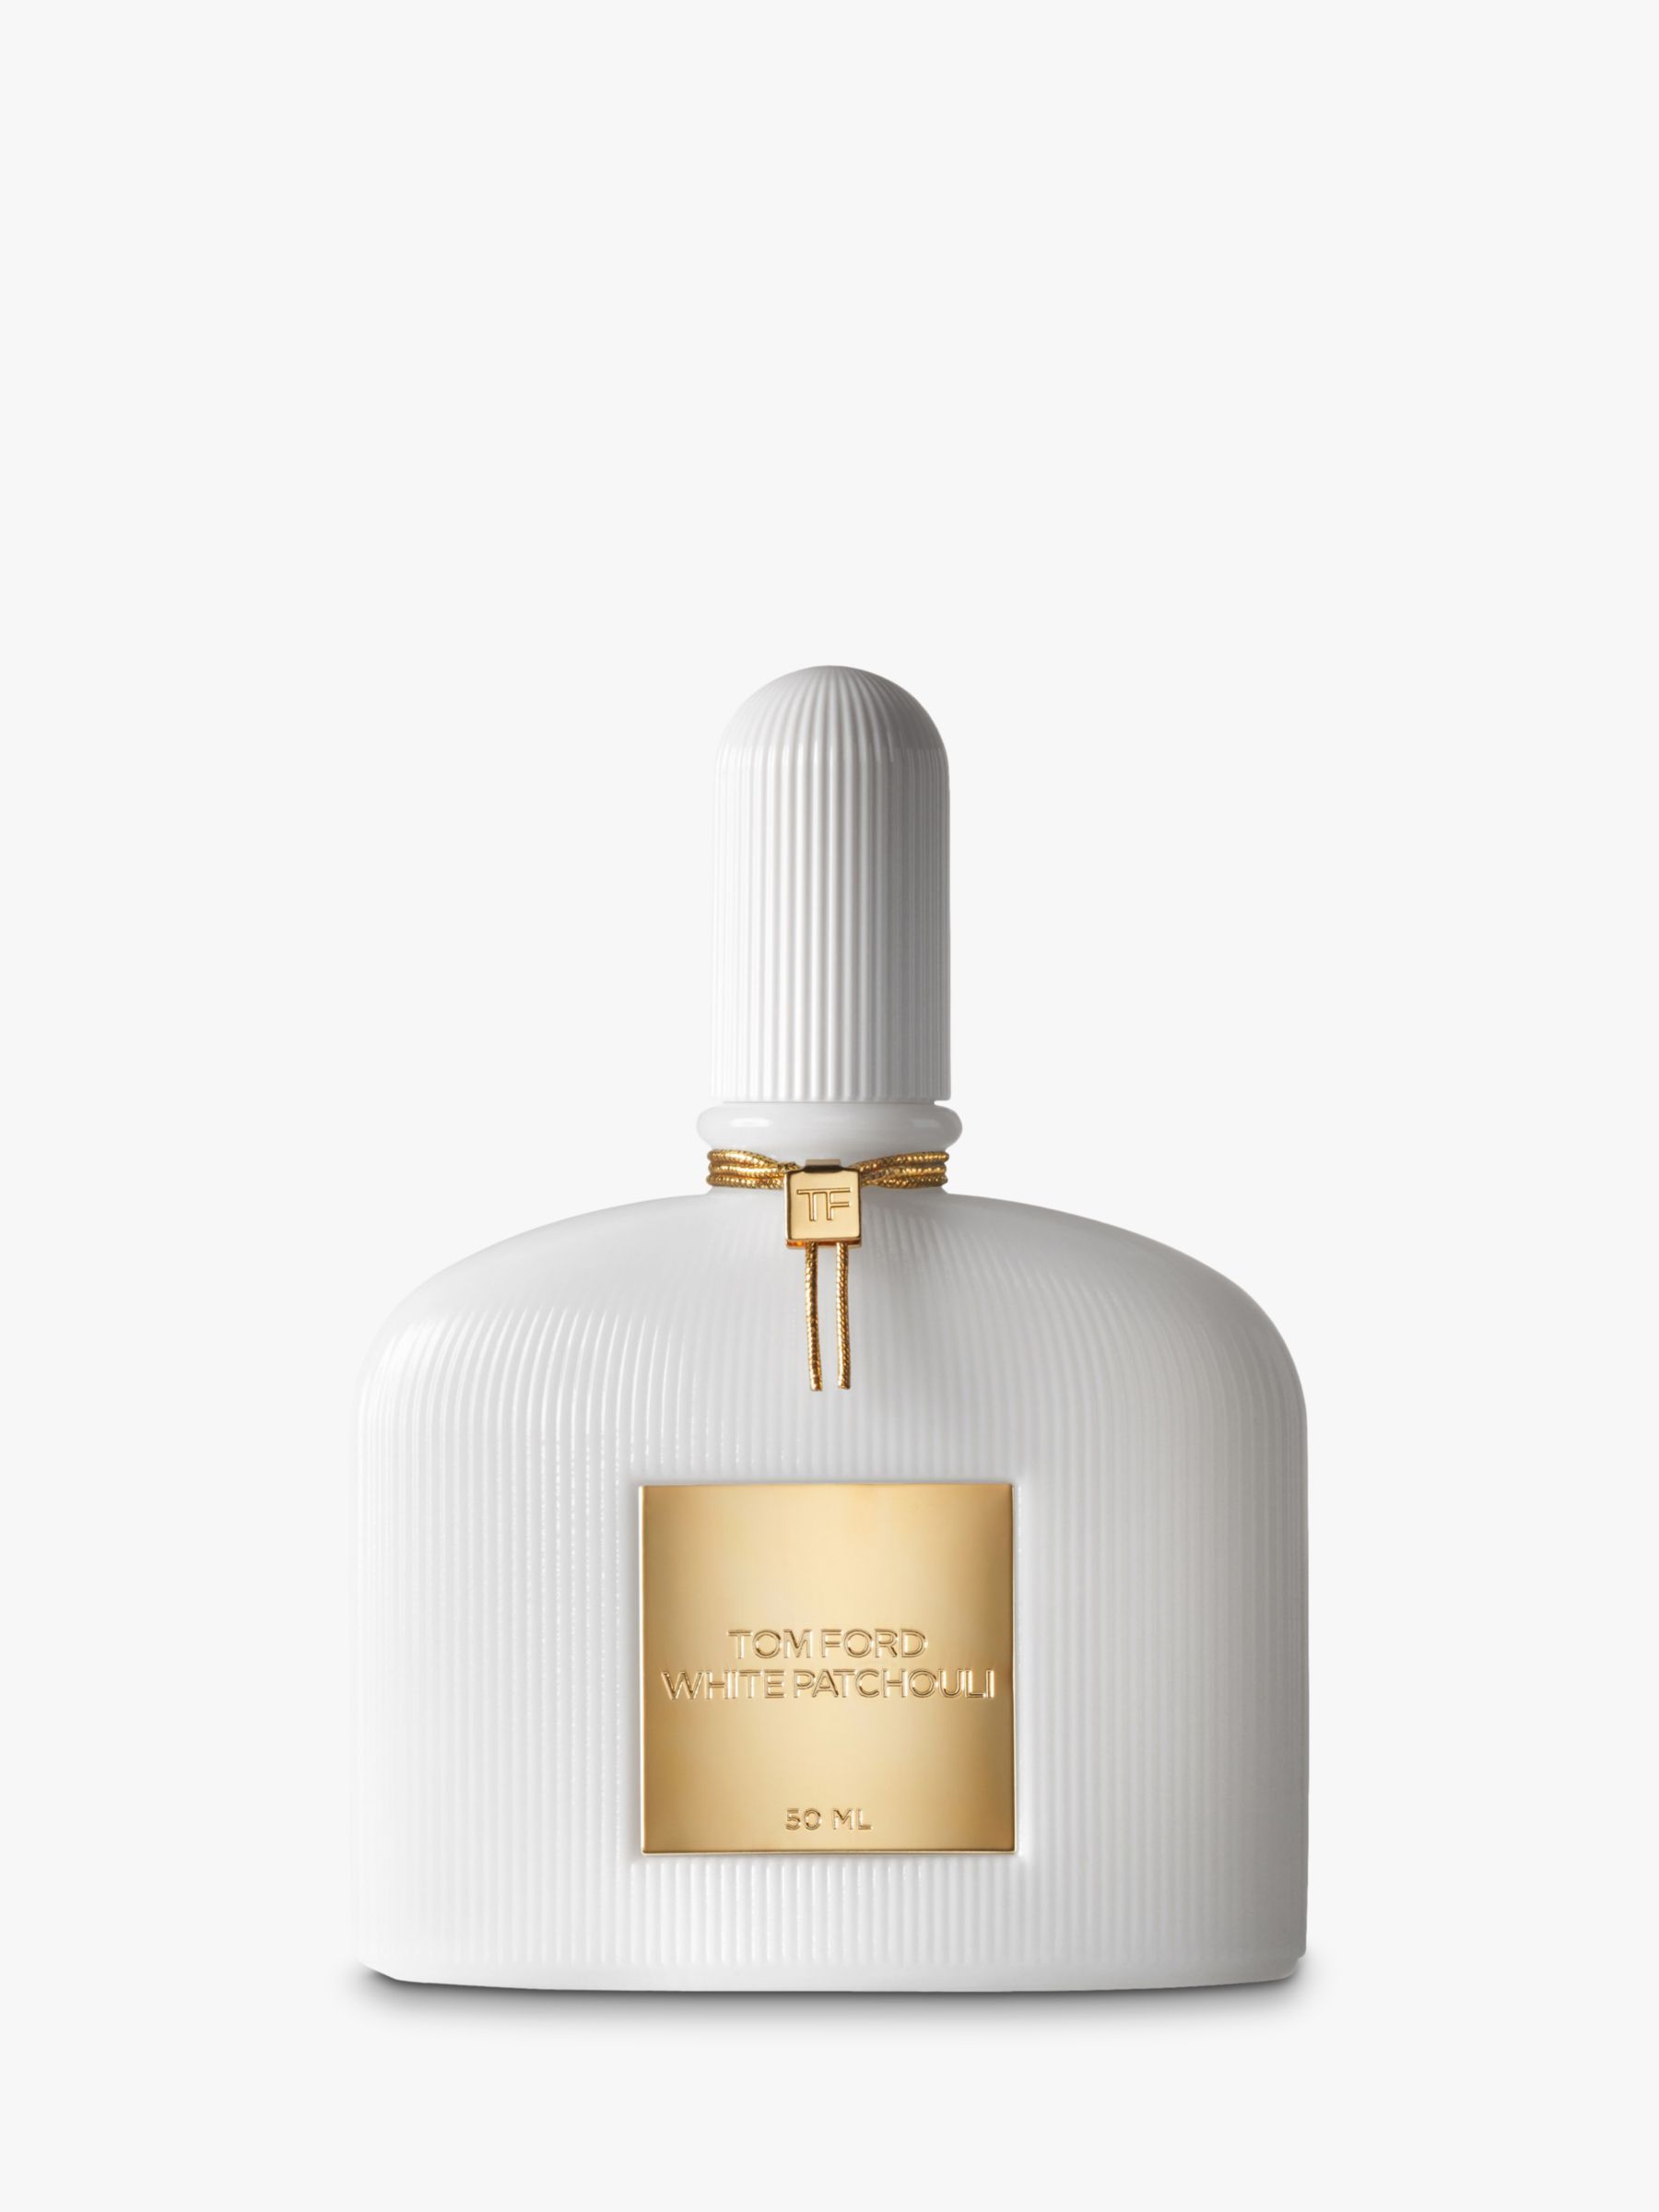 TOM FORD - Signature Fragrances | John Lewis & Partners